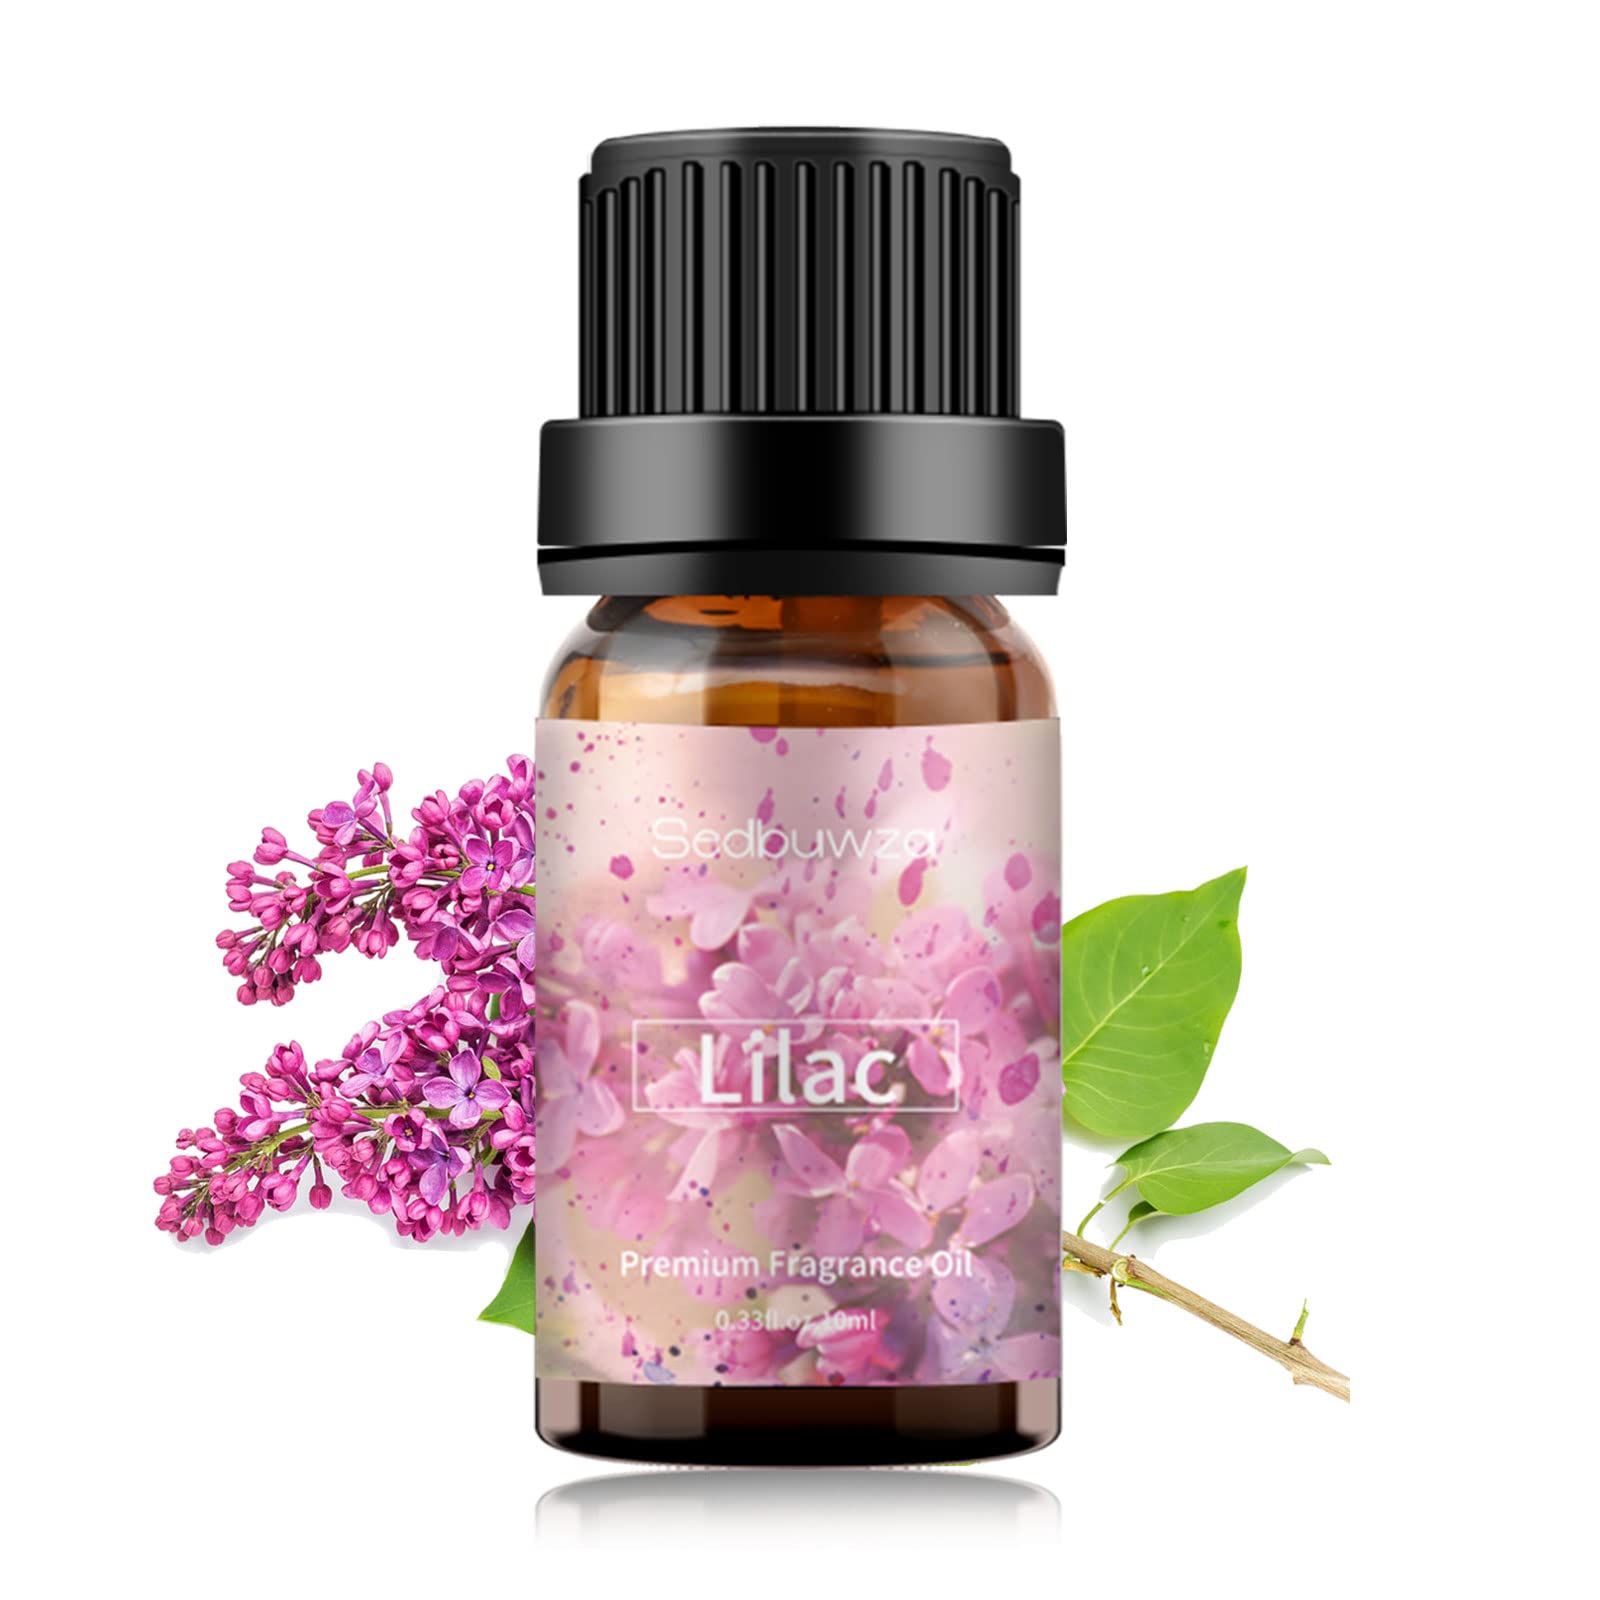 Sedbuwza Lilac Essential Oil Lilac Fragrance Oil for Diffuser